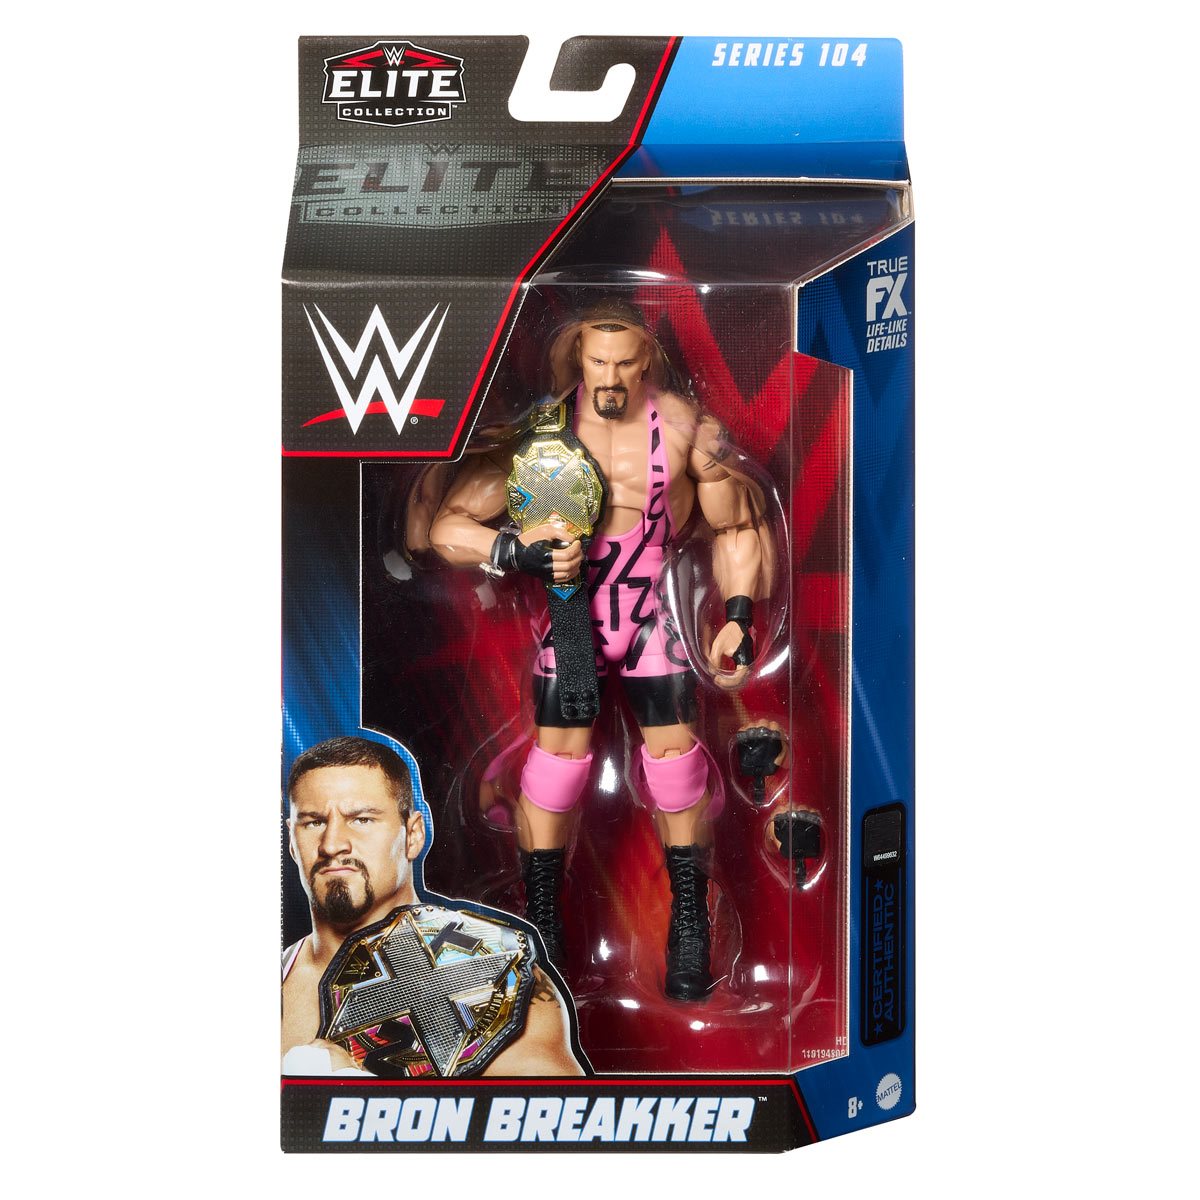 WWE Elite Collection Series 104: Bron Breakker